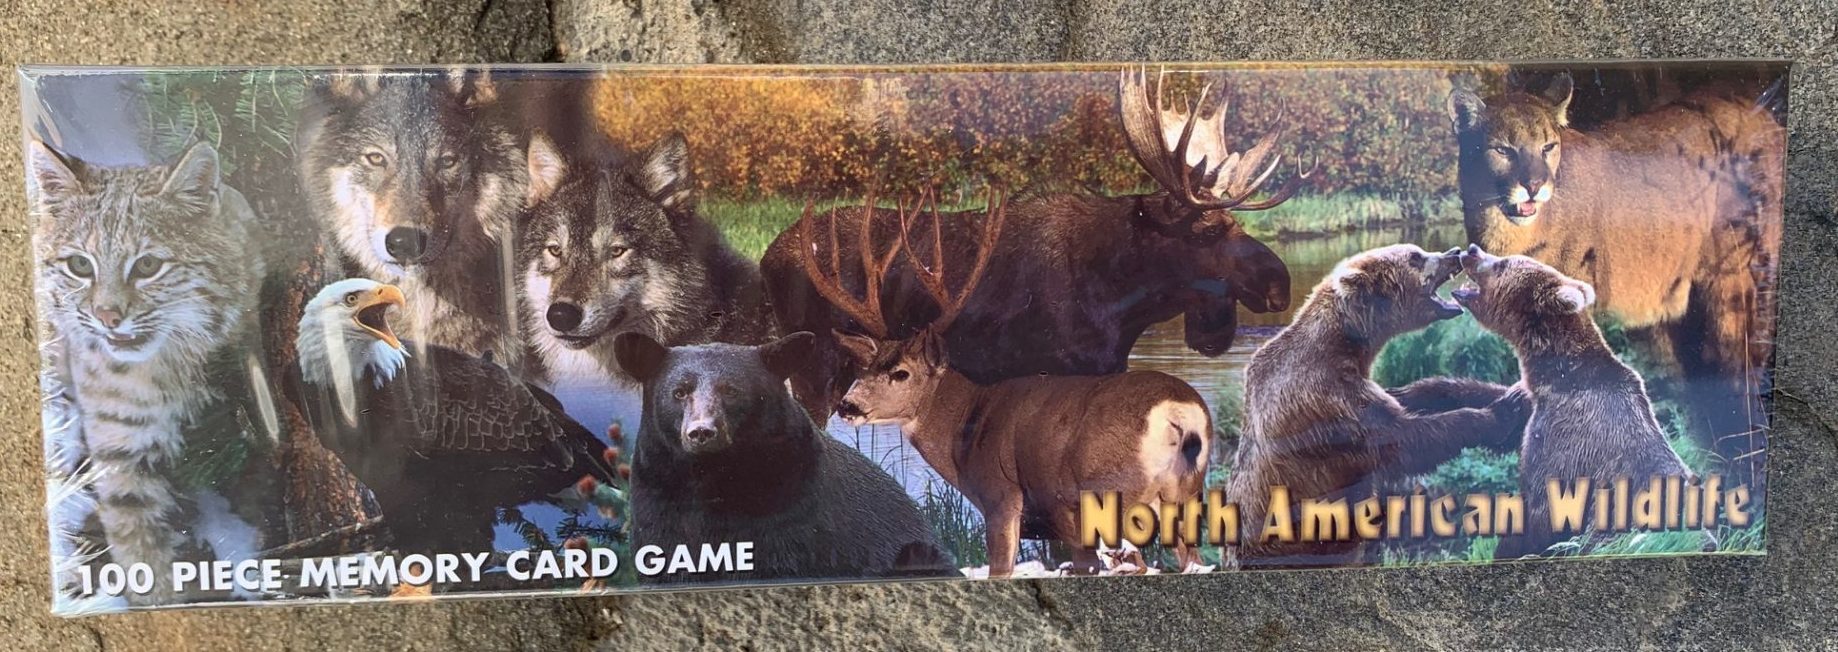 North American Wildlife Memory Game